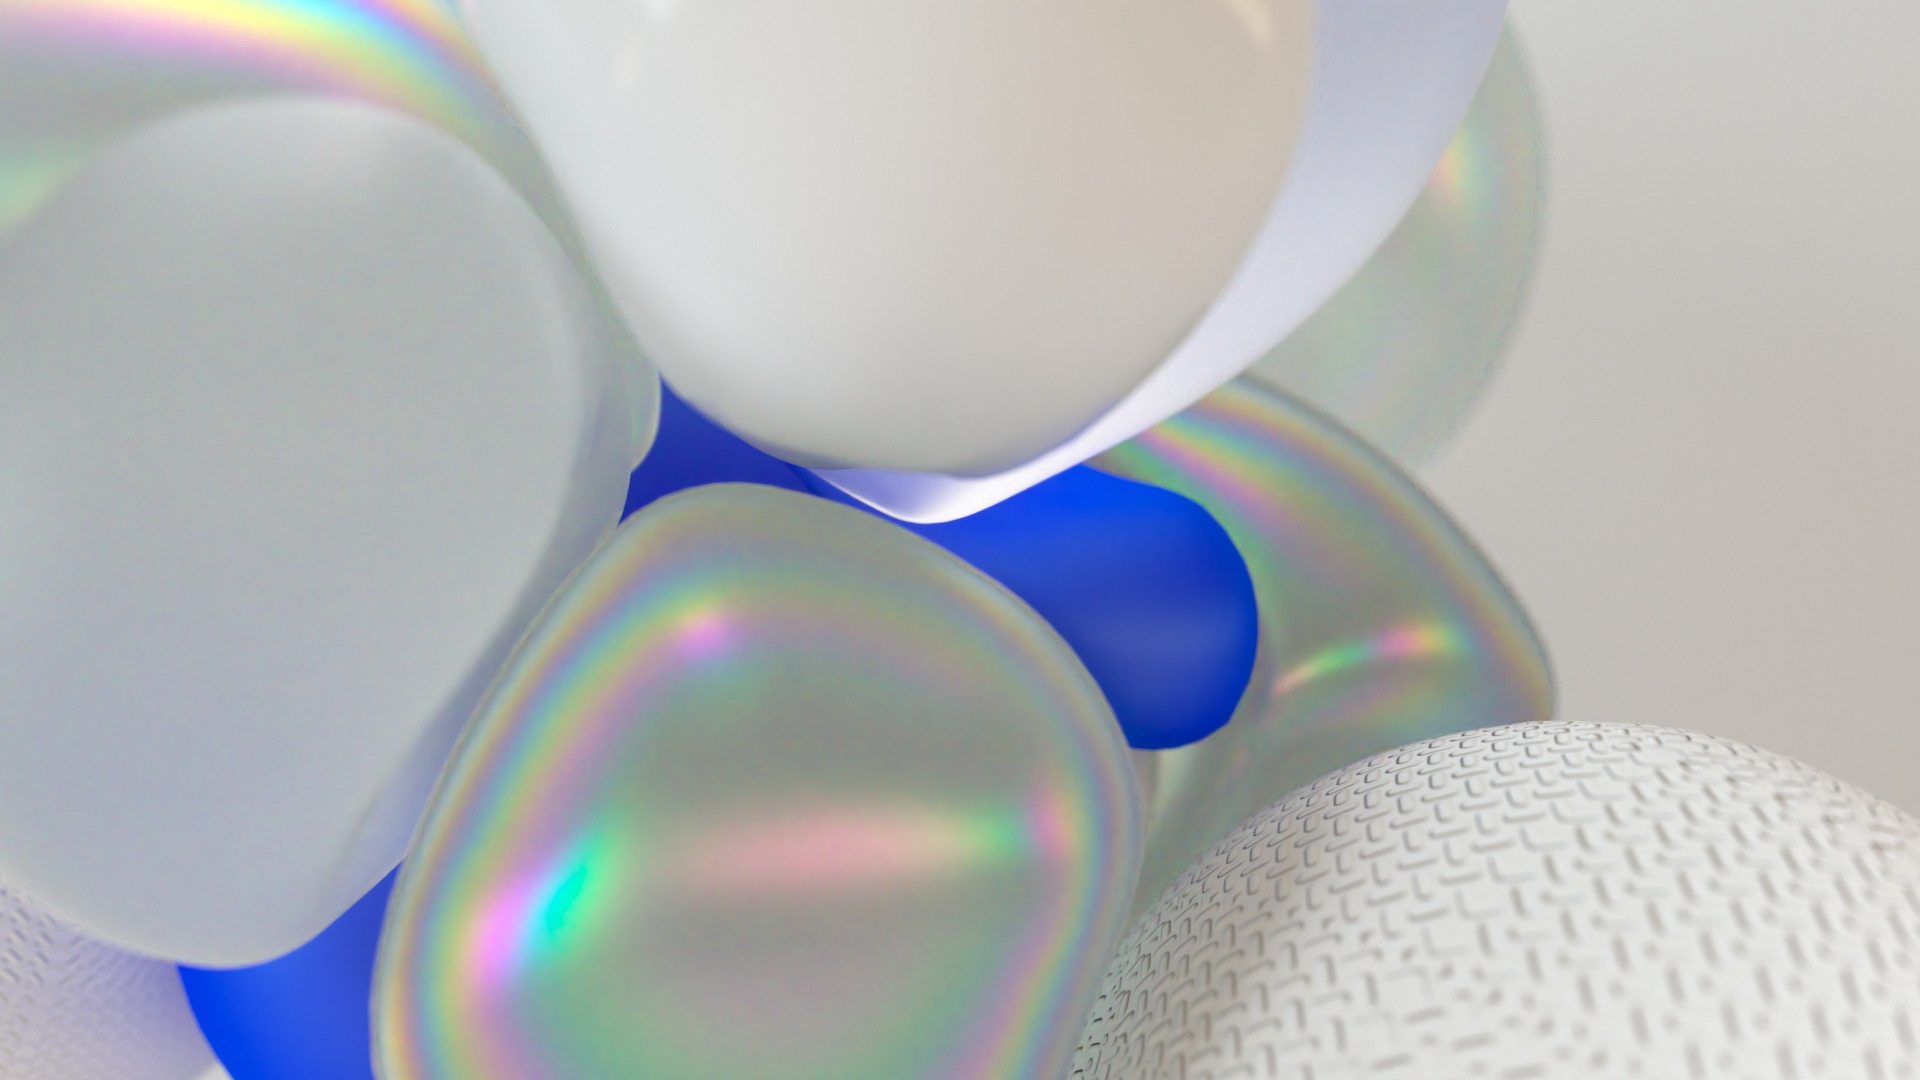 Blue, reflective, white Bubbles and Balls